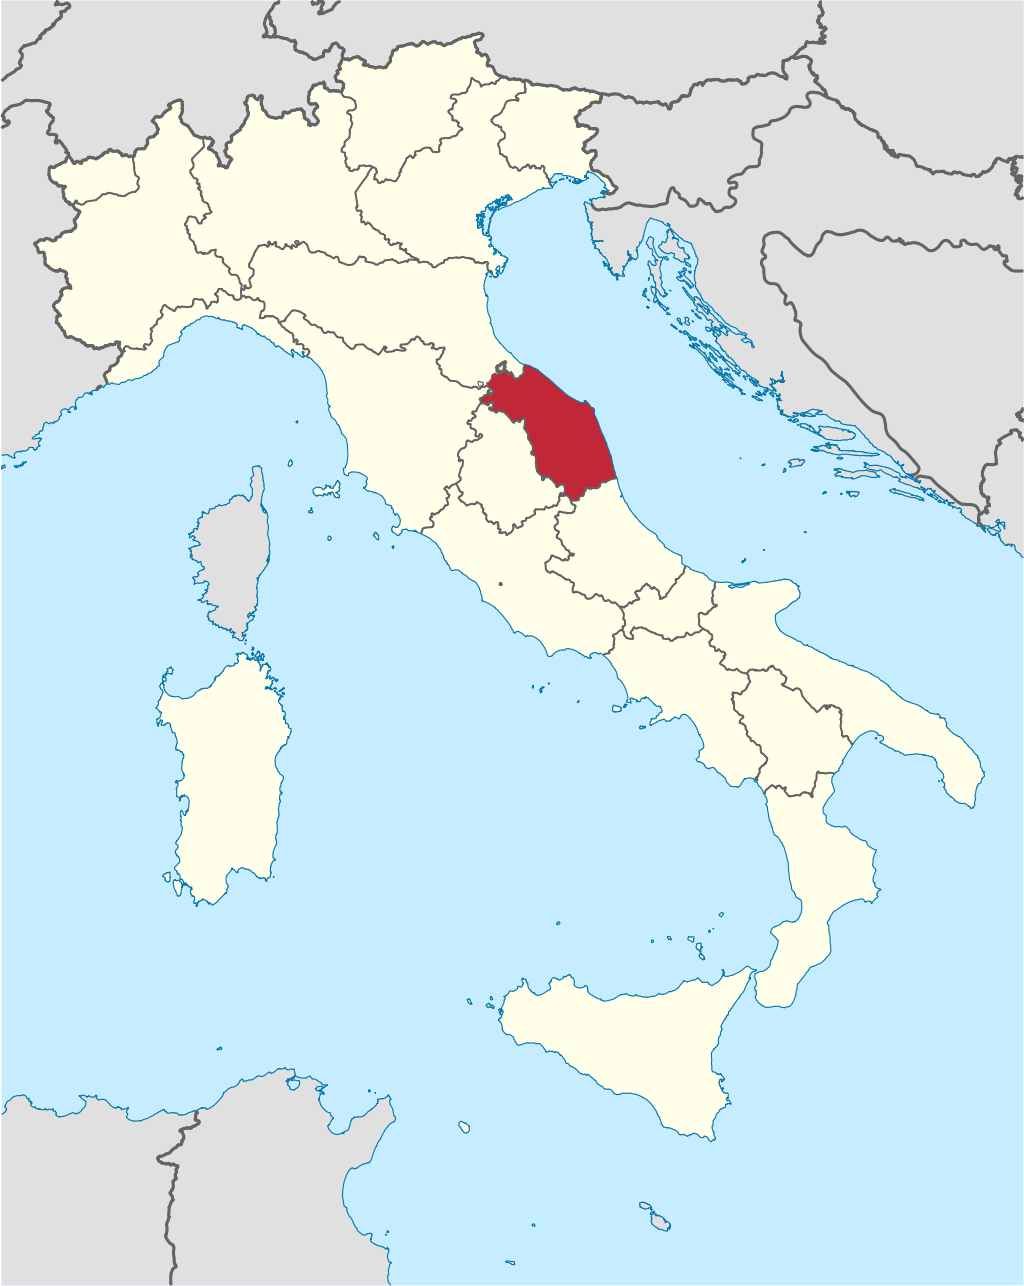 Baroque Church Urbex location or around the region Marche (Macerata), Italy